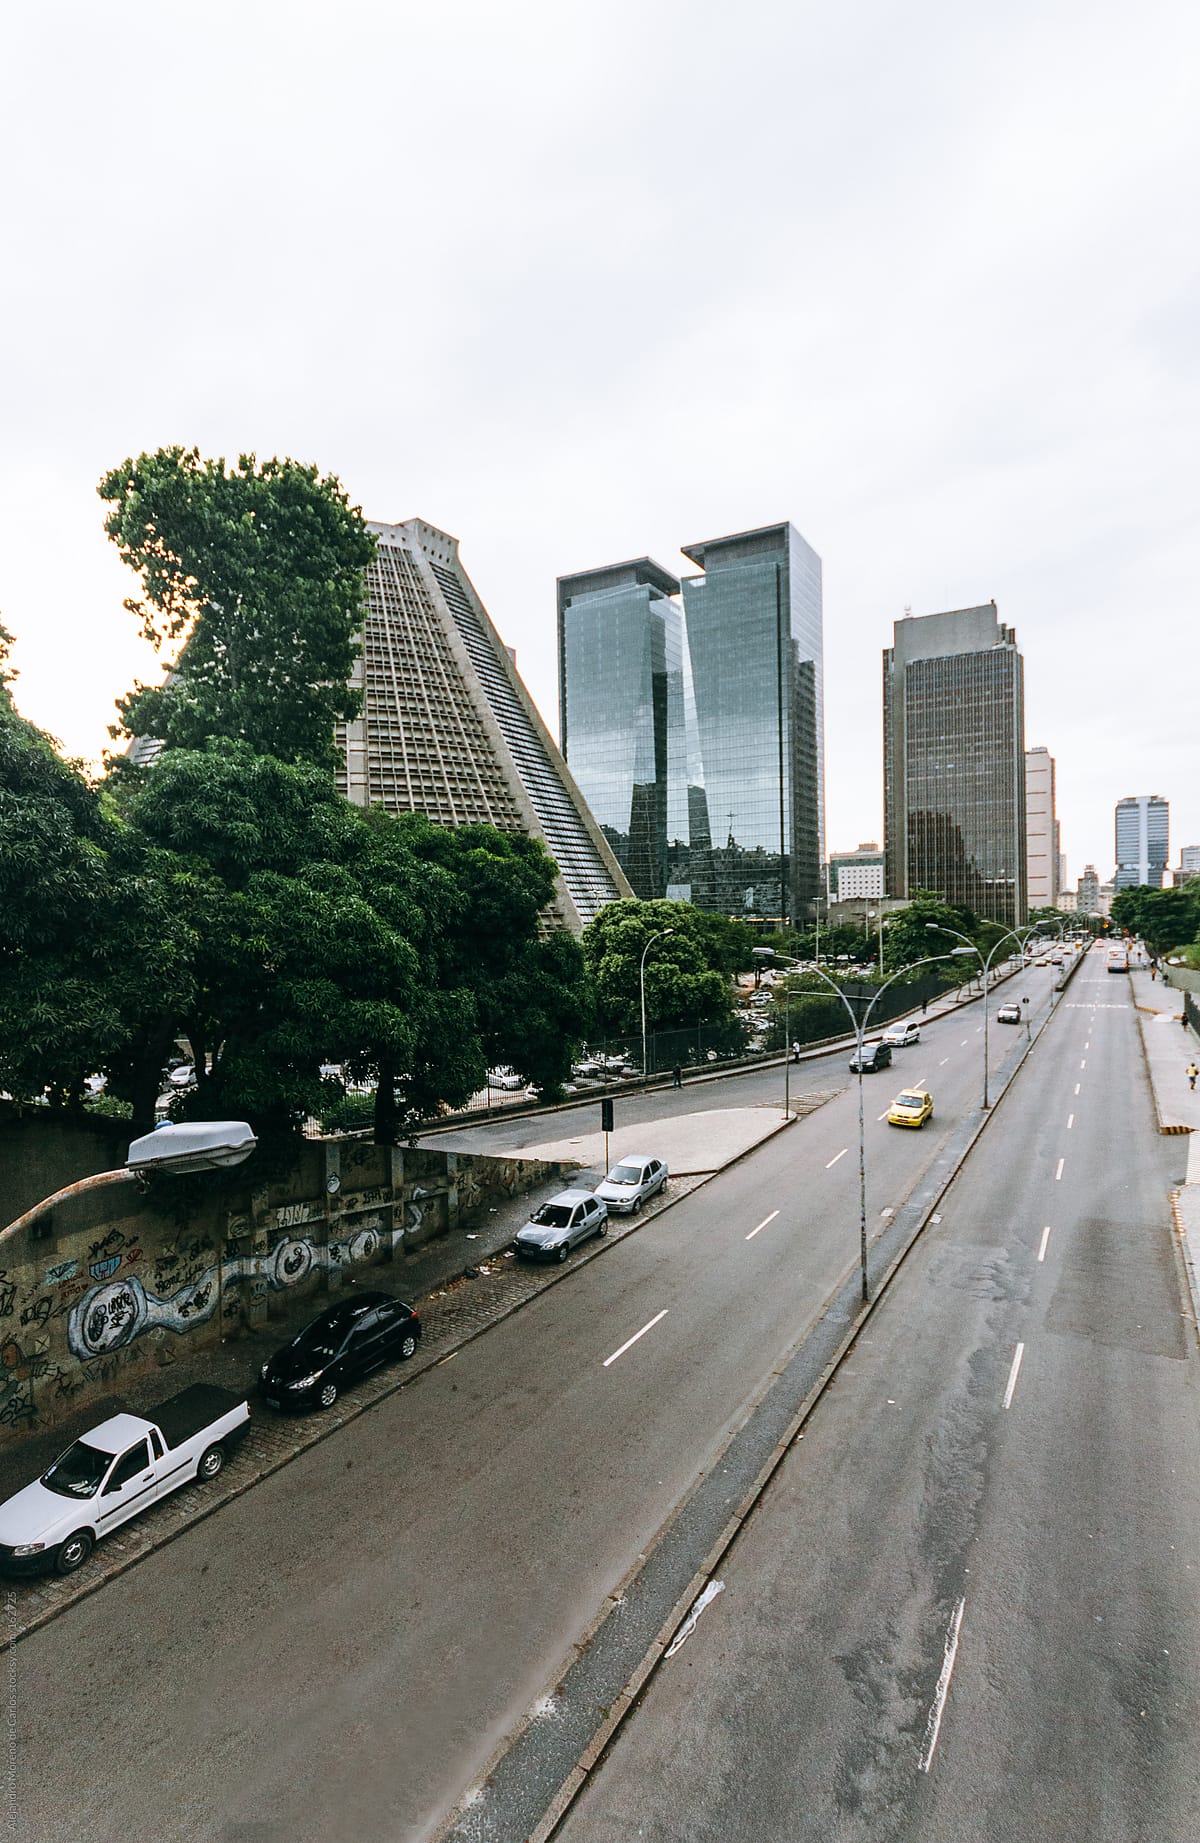 Road in a city with buildings. Rio de Janeiro, Brazil